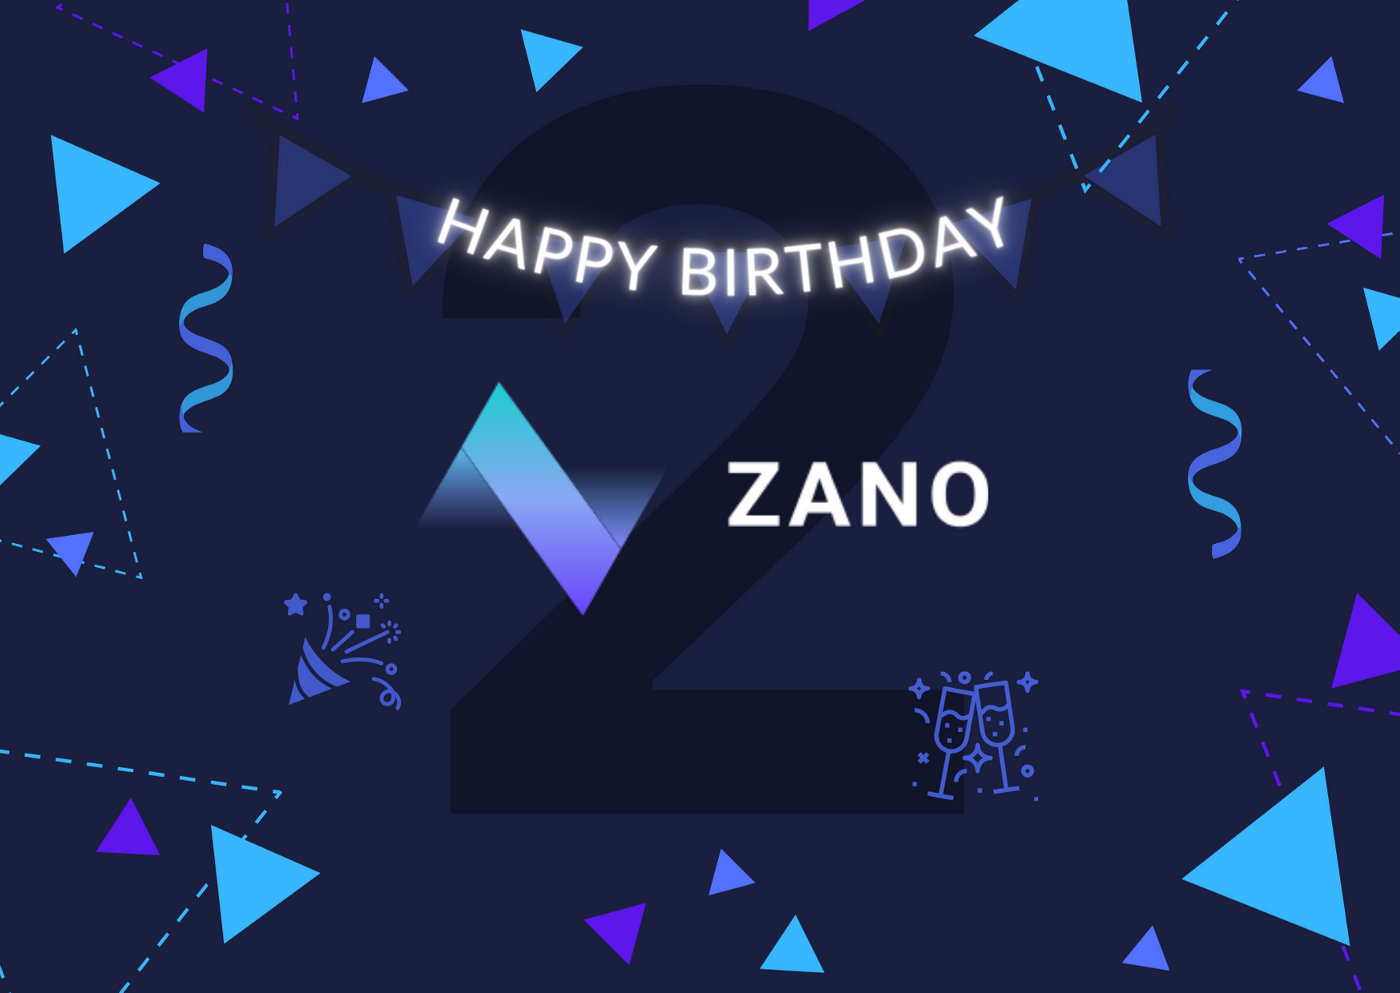 Happy 2nd Birthday Zano!